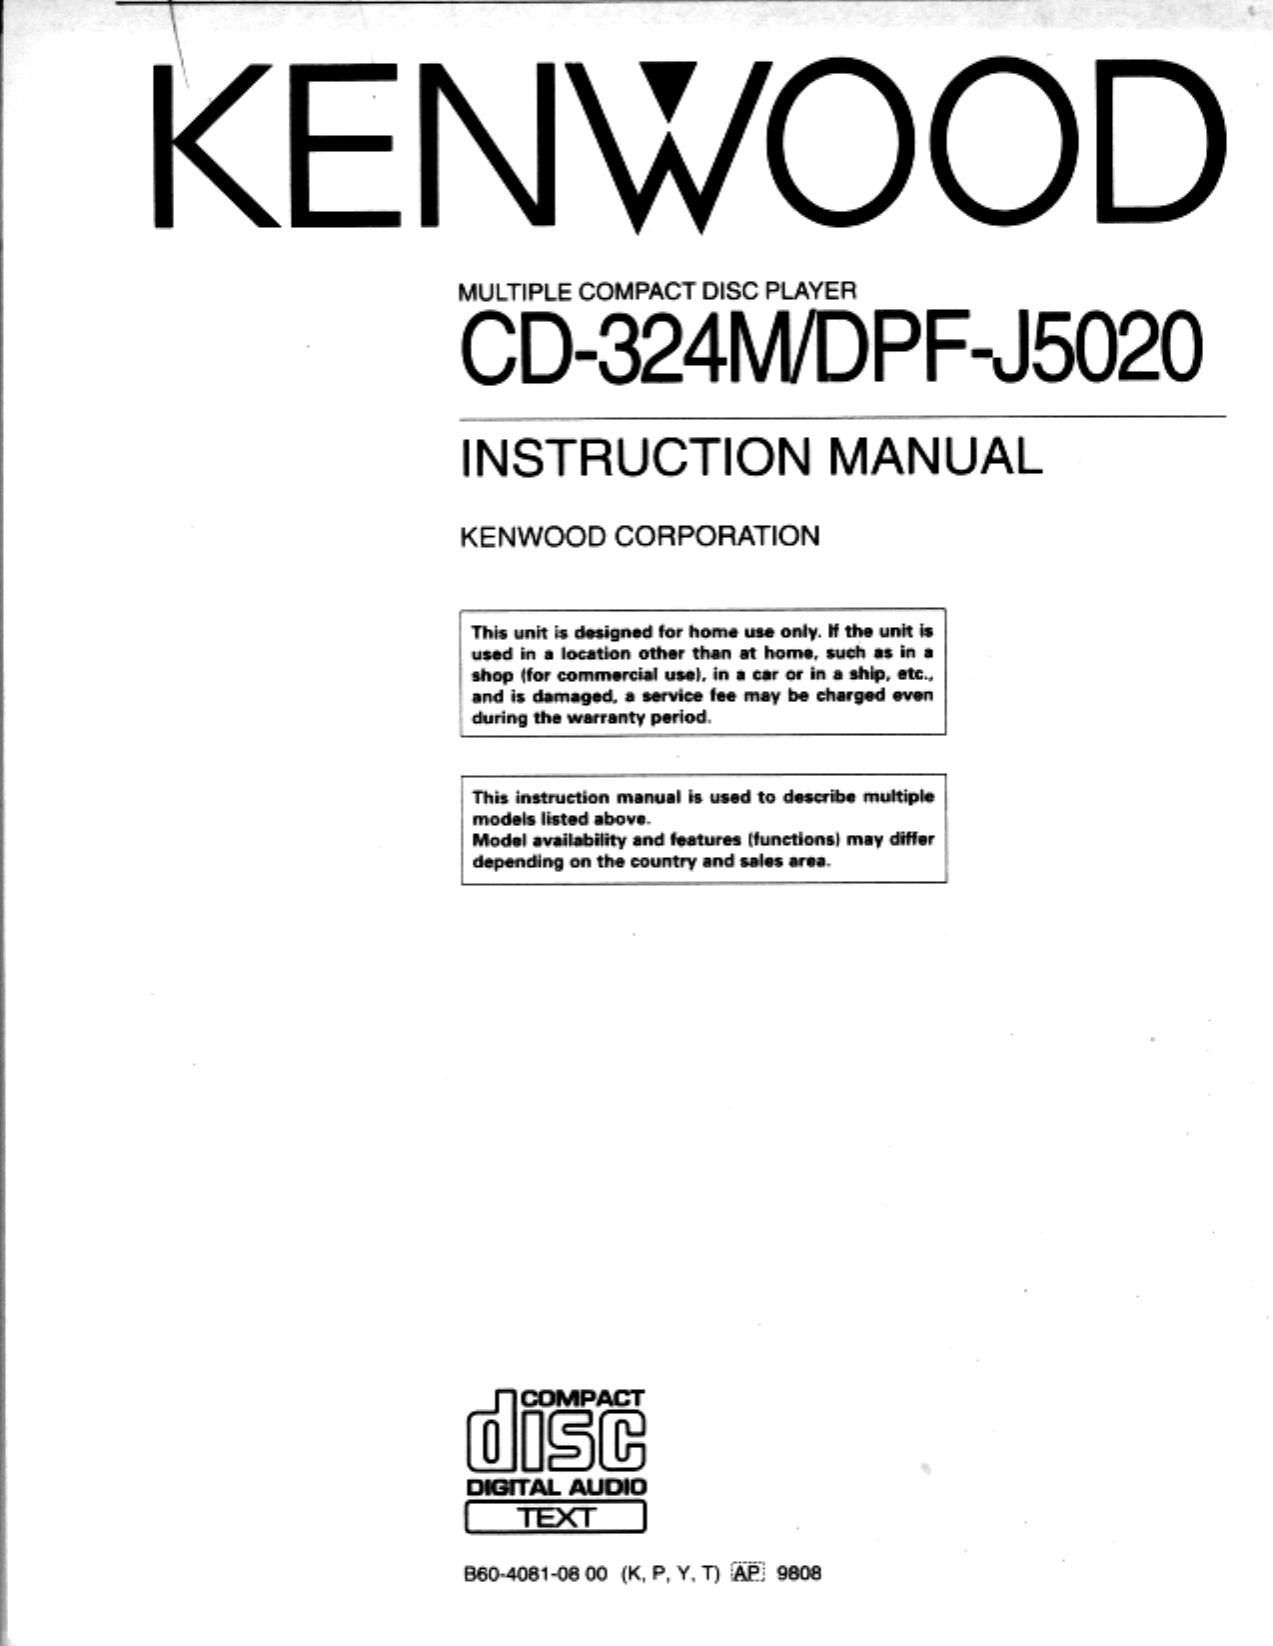 Kenwood DPFJ 5020 Owners Manual